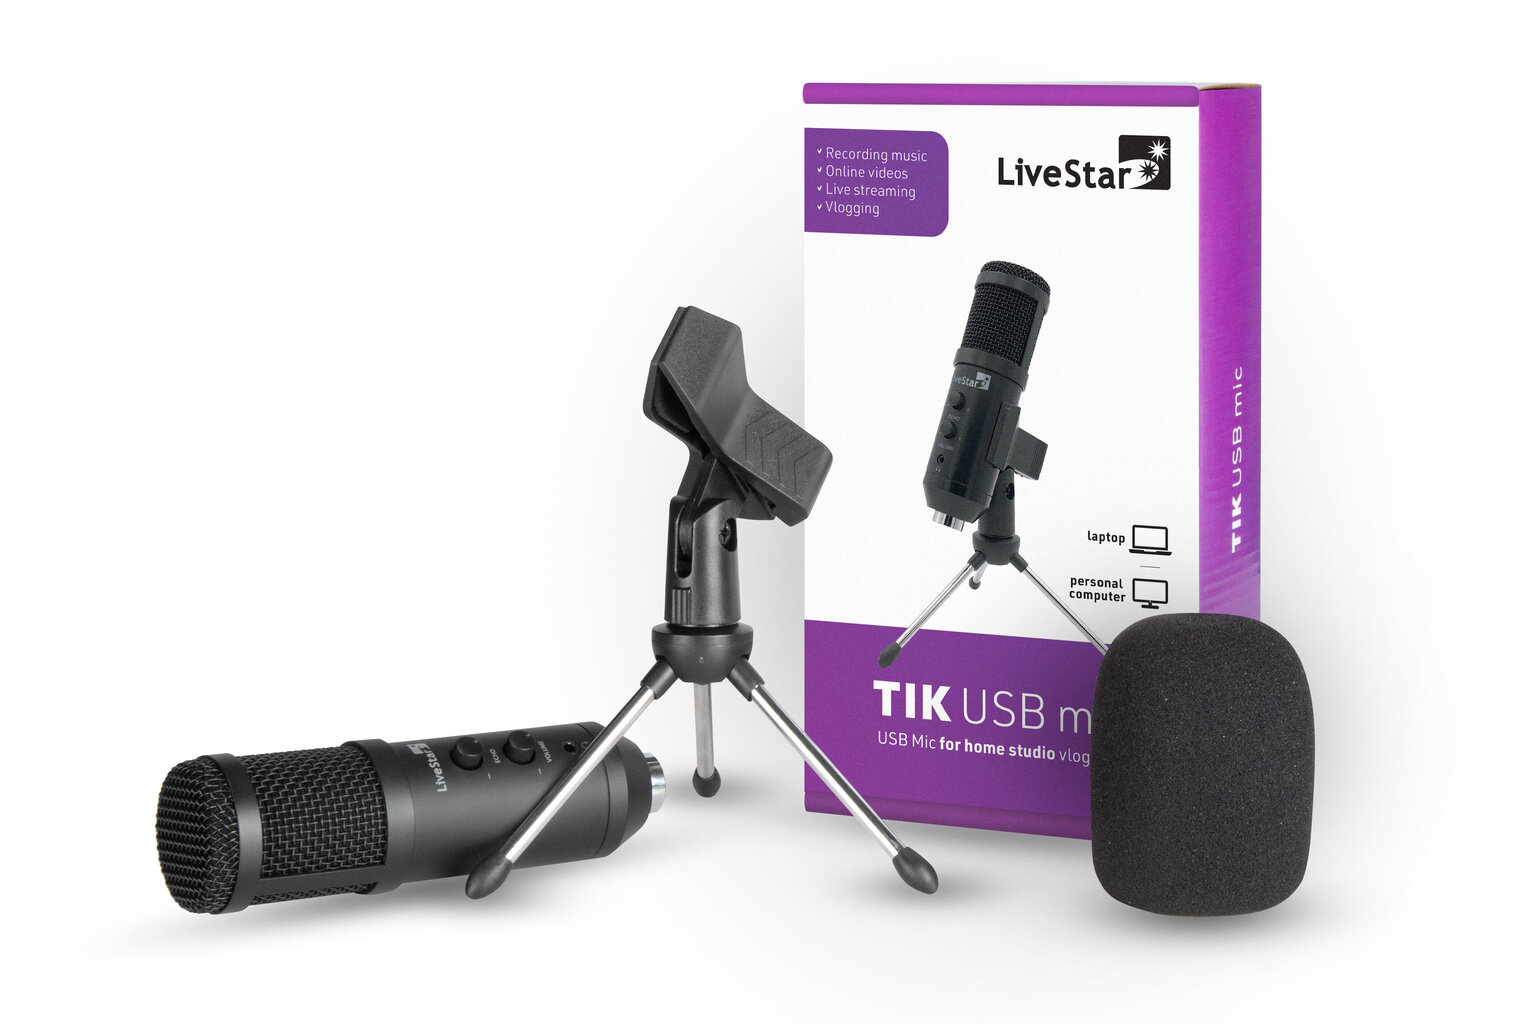 Kompiuterio priedas LiveStar TIK USB mikrofonas su stoveliu kaina | pigu.lt